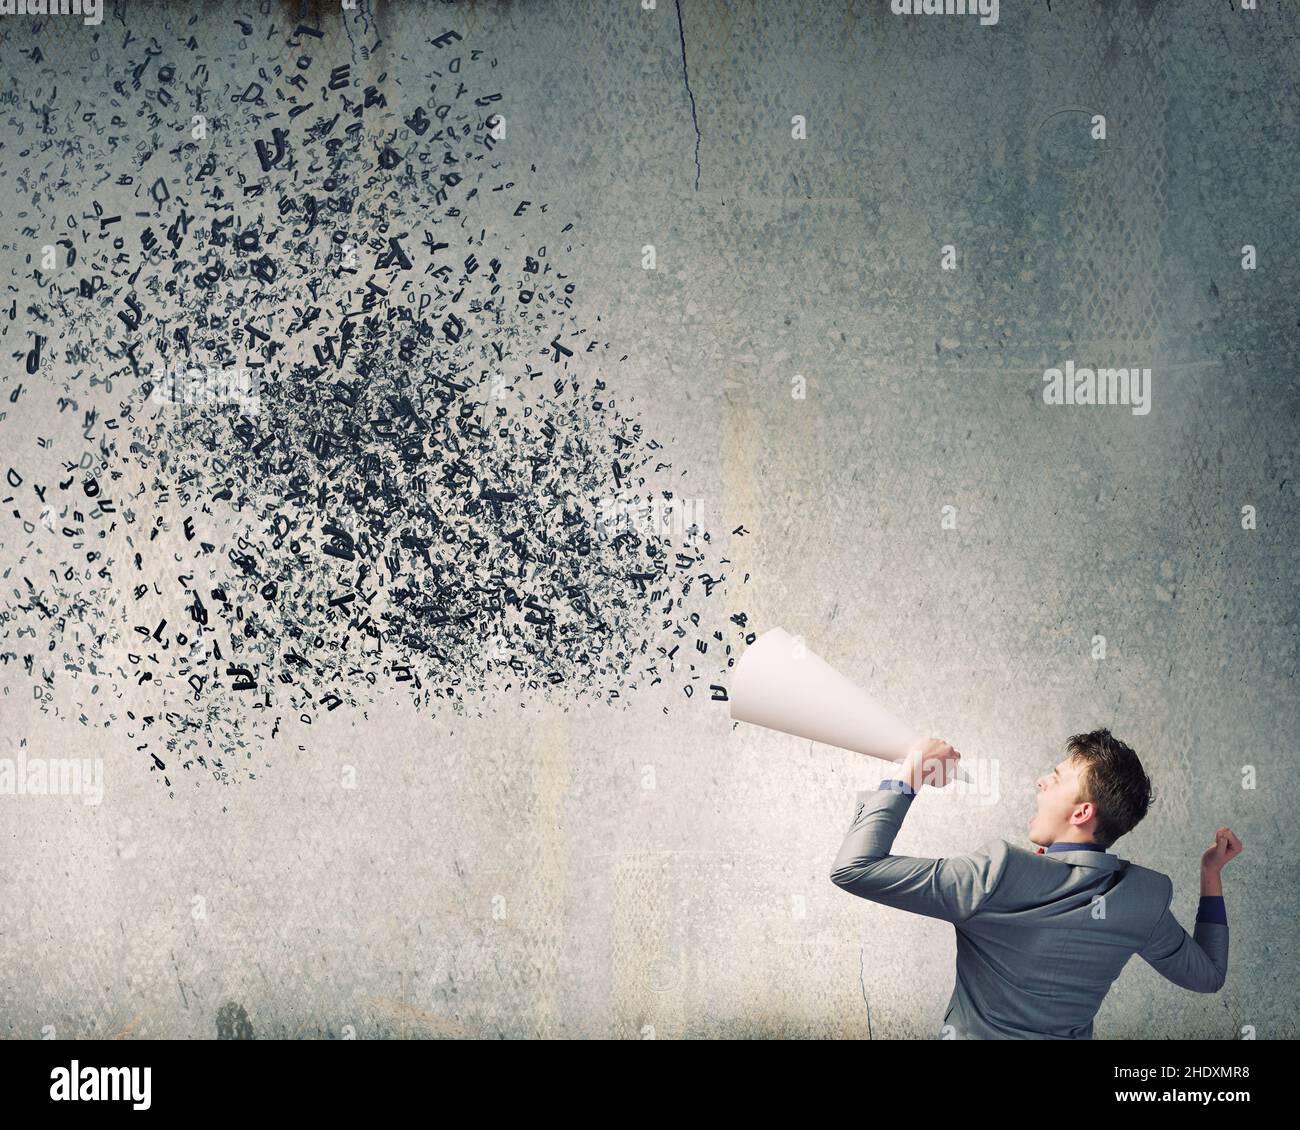 shouting, advertising, brainwave, announce, scream, screaming, shout, brainwaves, announces Stock Photo